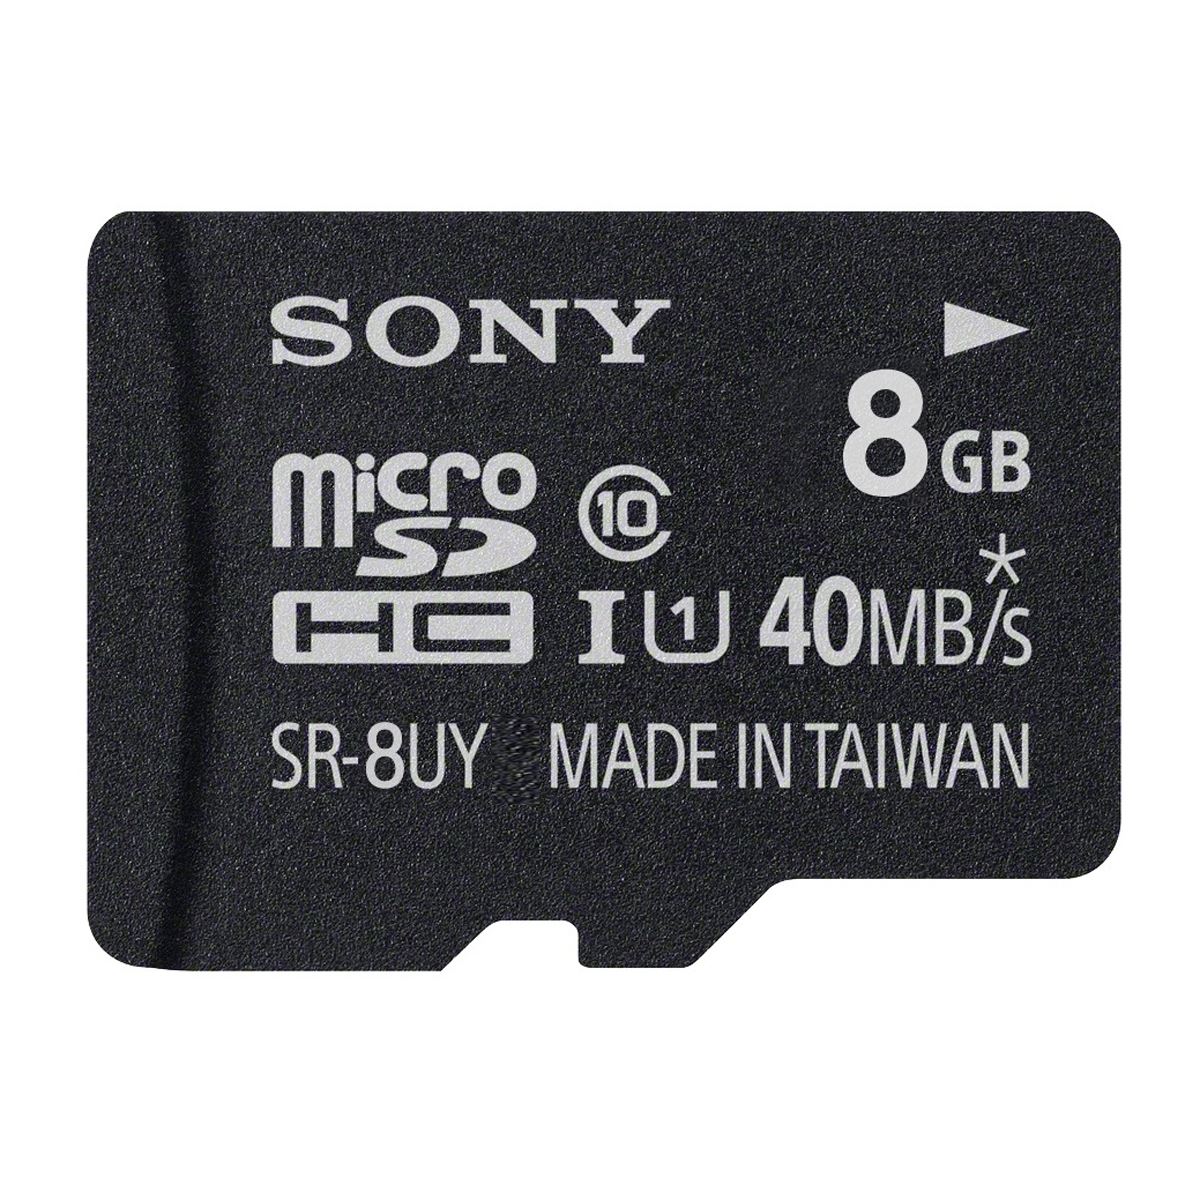 Tarjeta Sony Micro Sd Class10 8gb